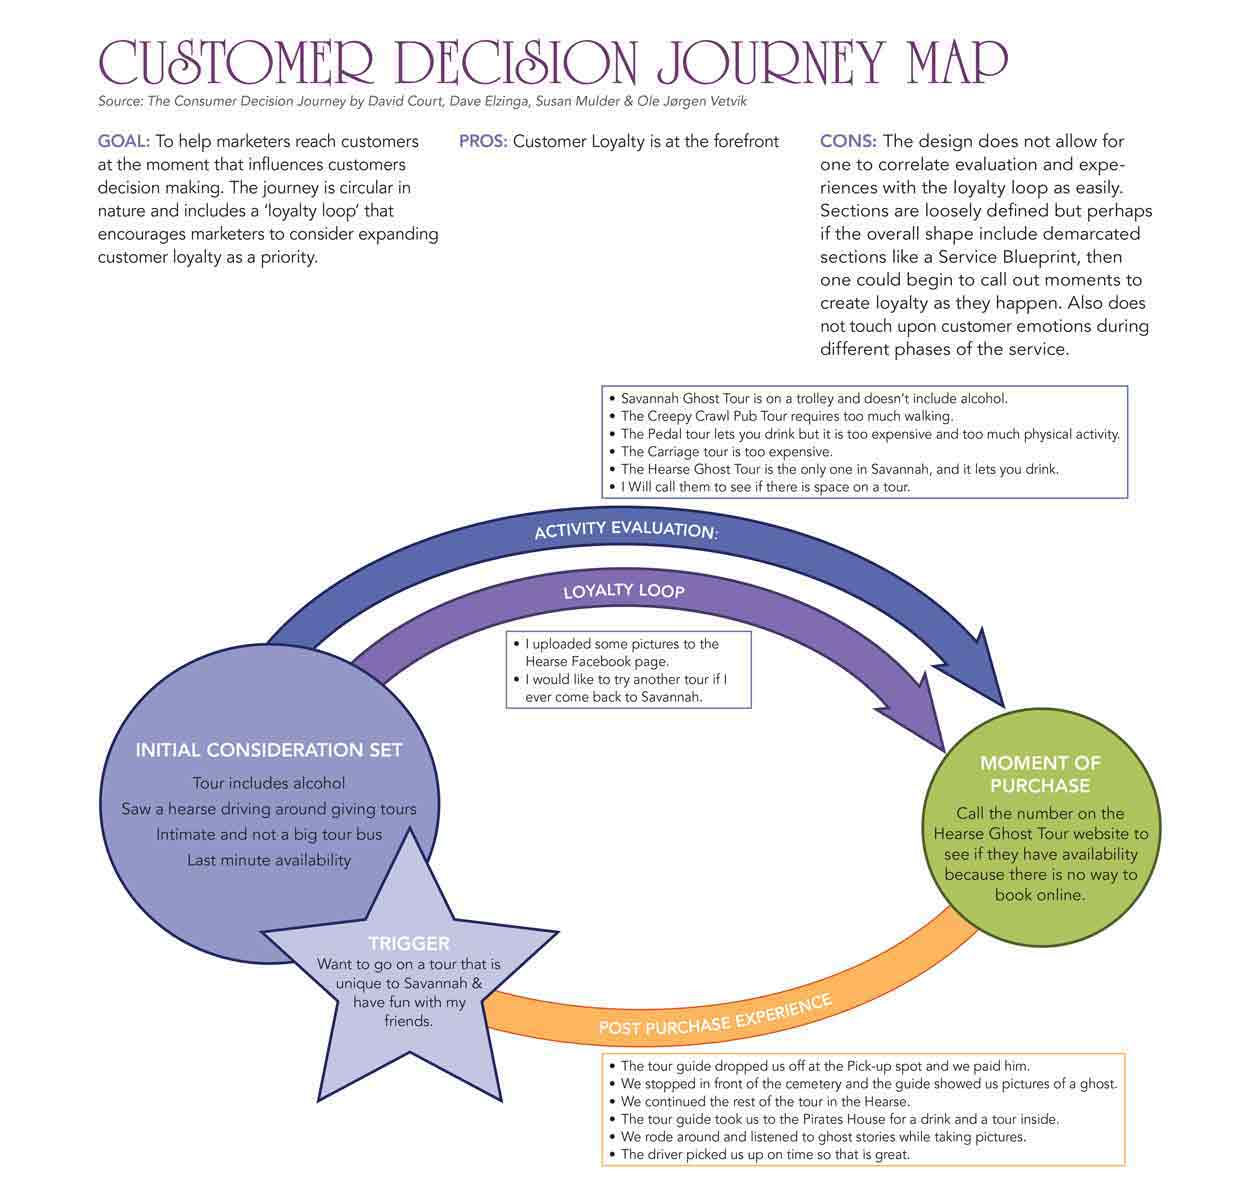 Bettencourt & Ulwick's Customer-Centered Innovation Map